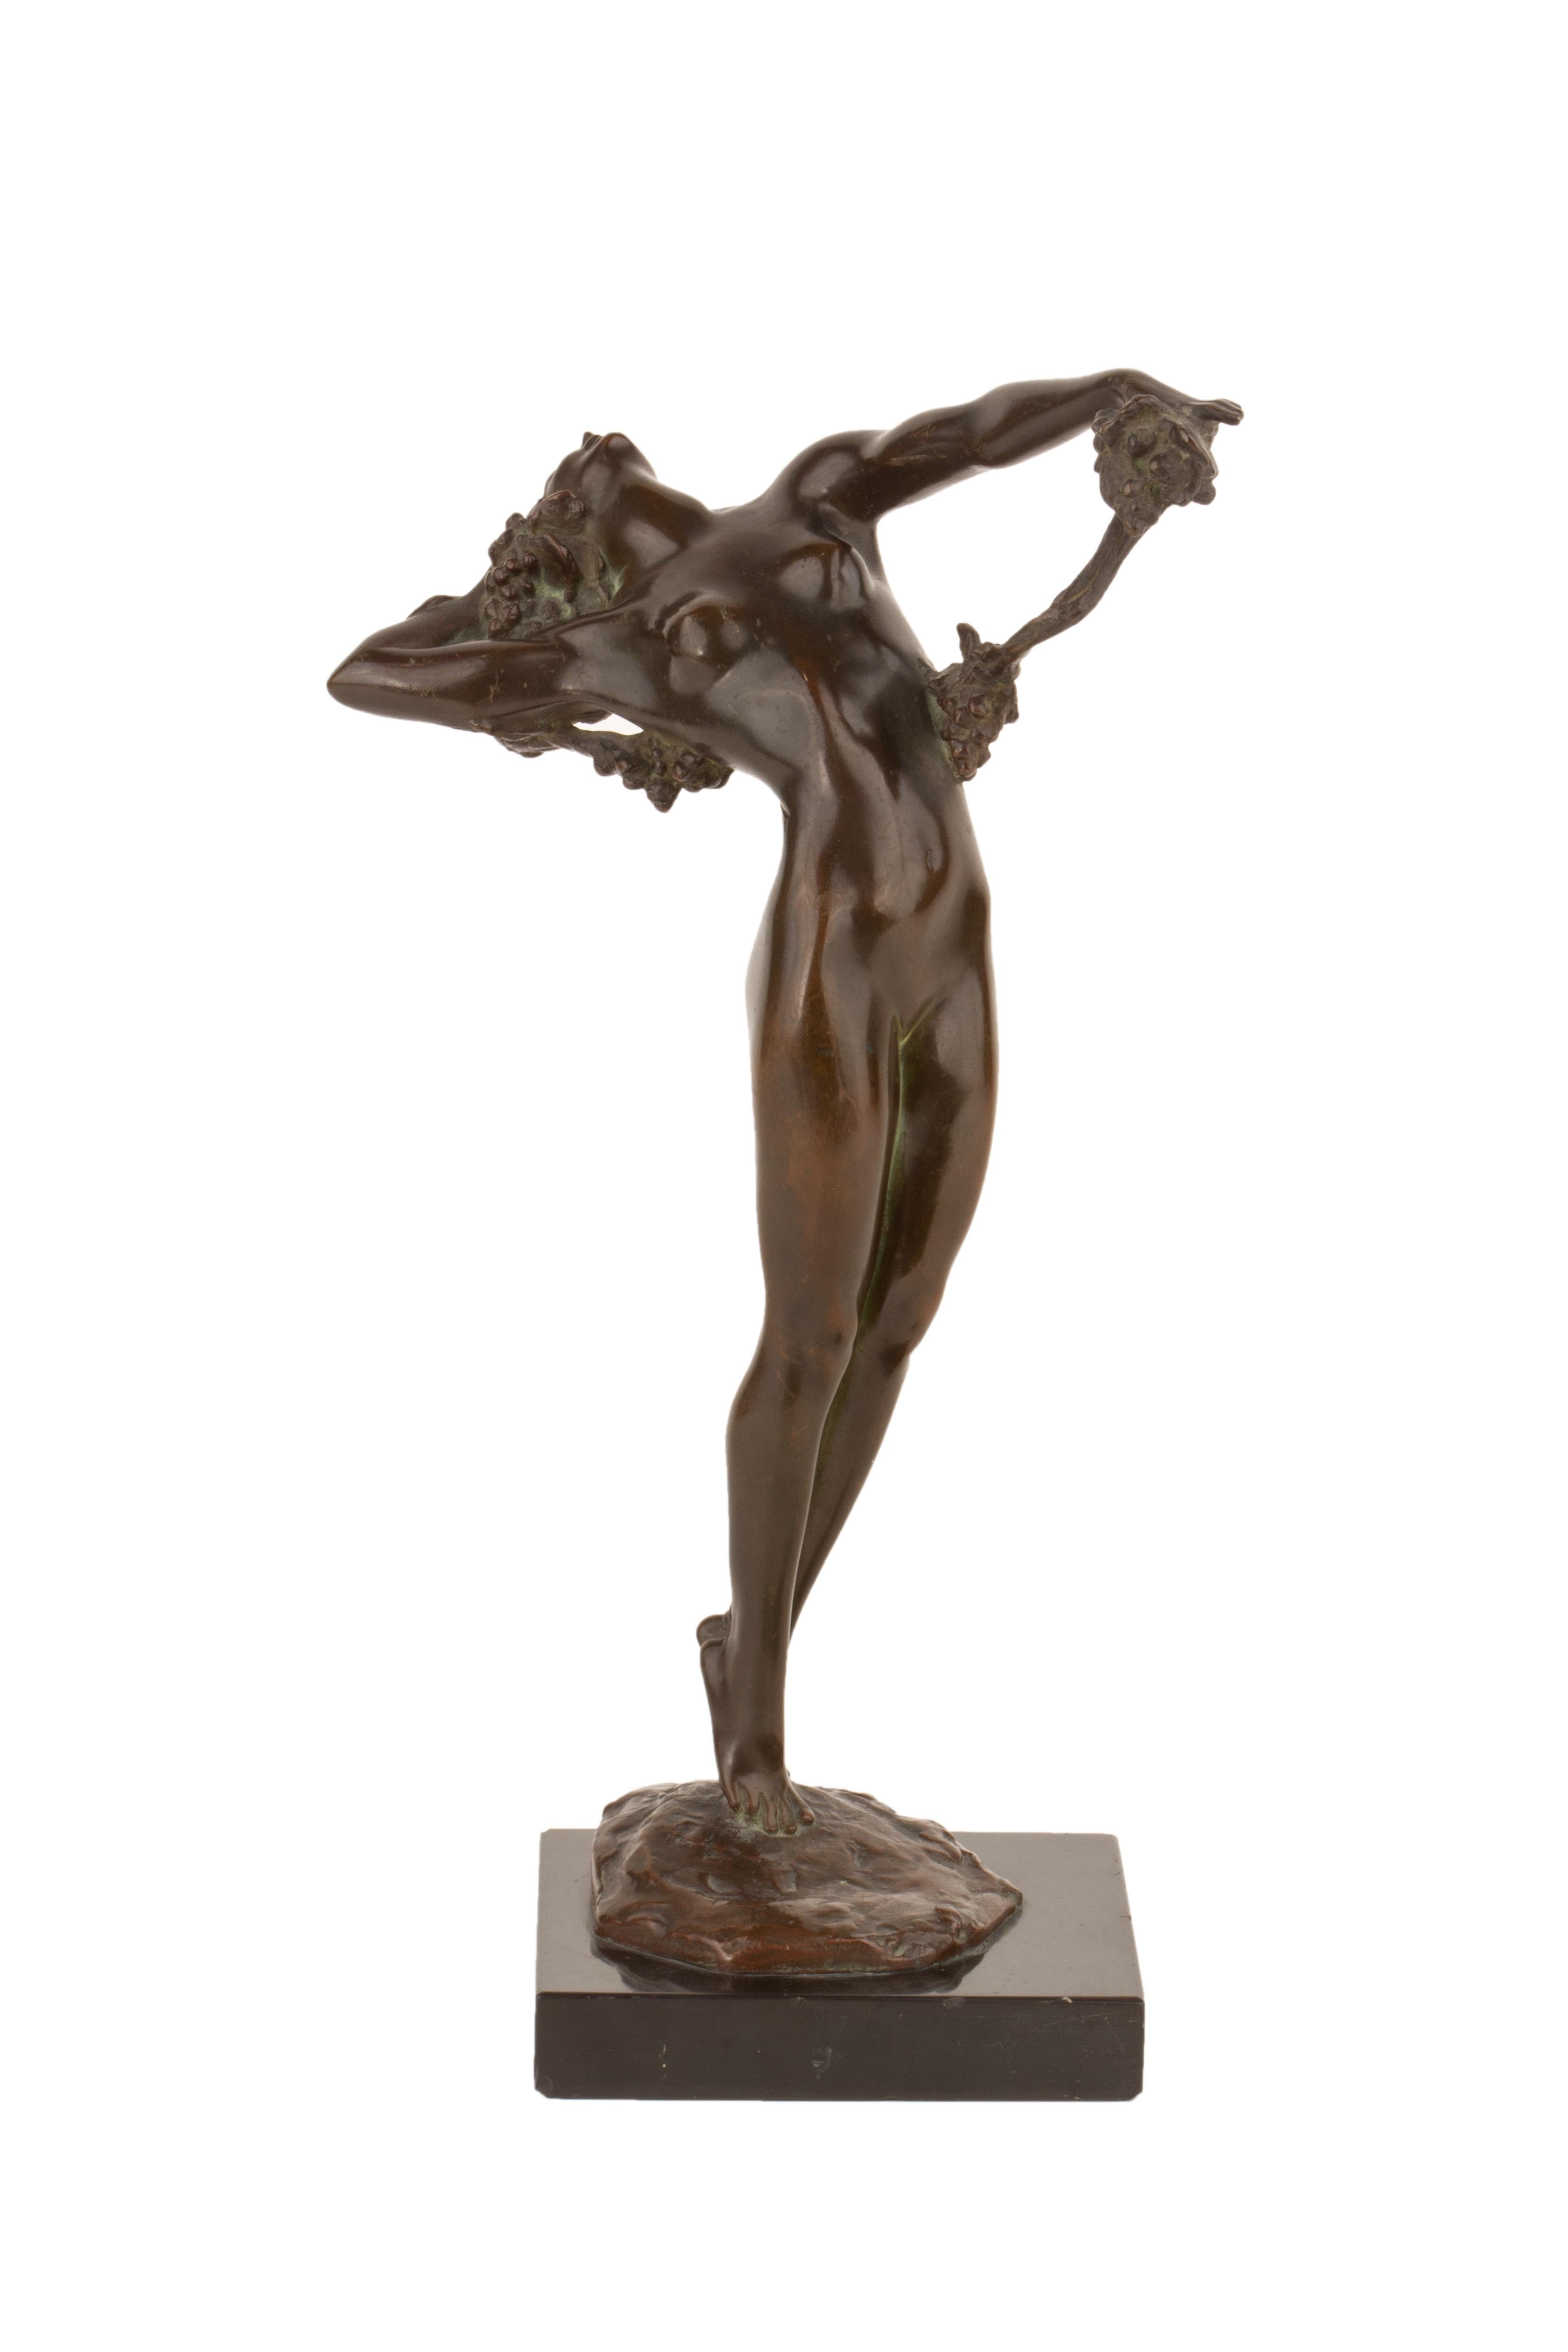 An American Art Nouveau cast patinated bronze sculpture 